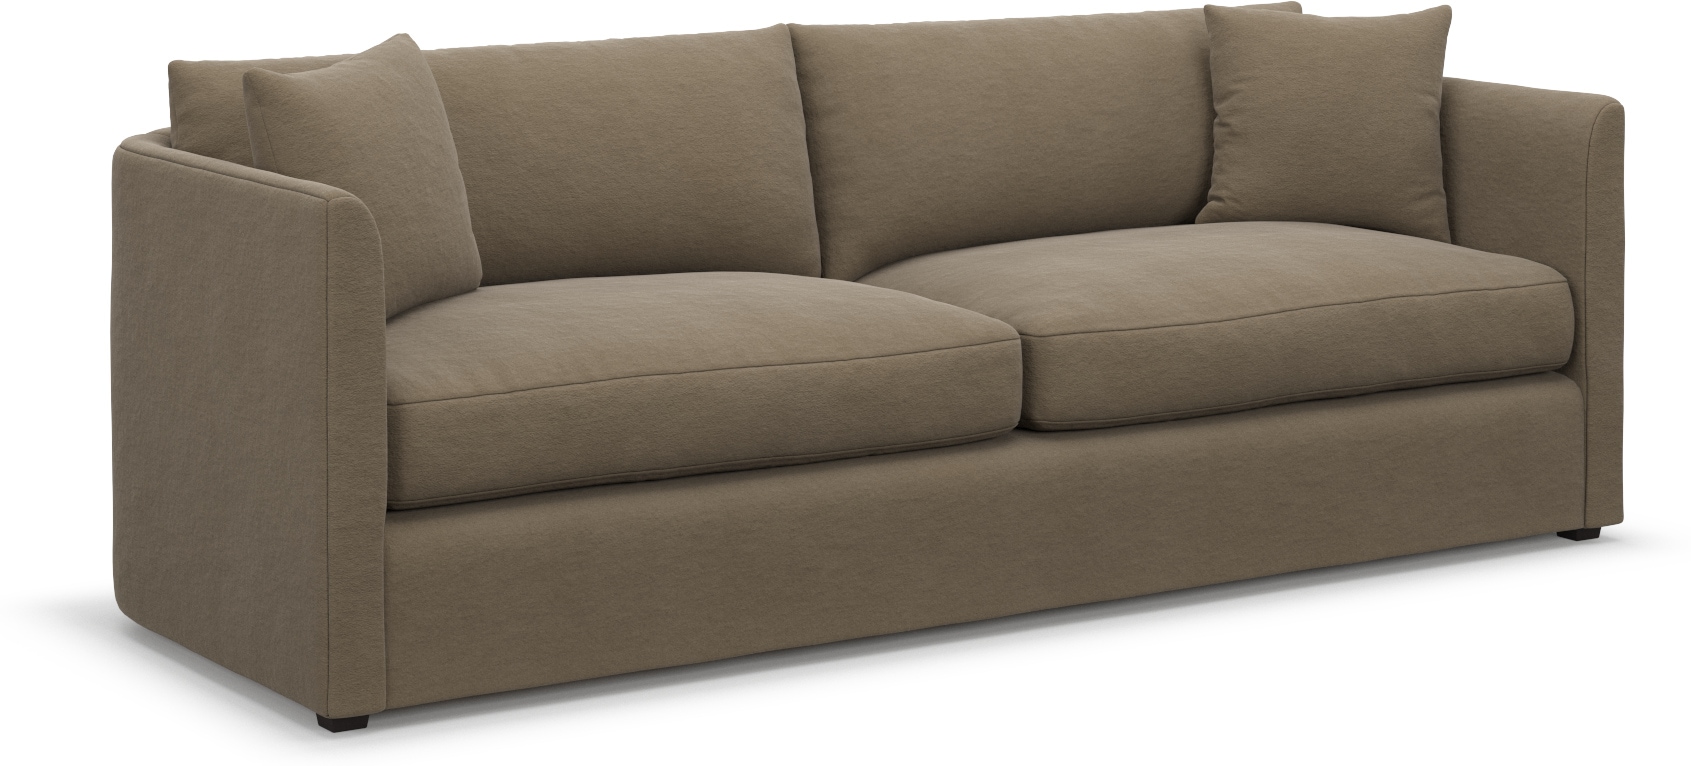 Benji Sofa | Value City Furniture